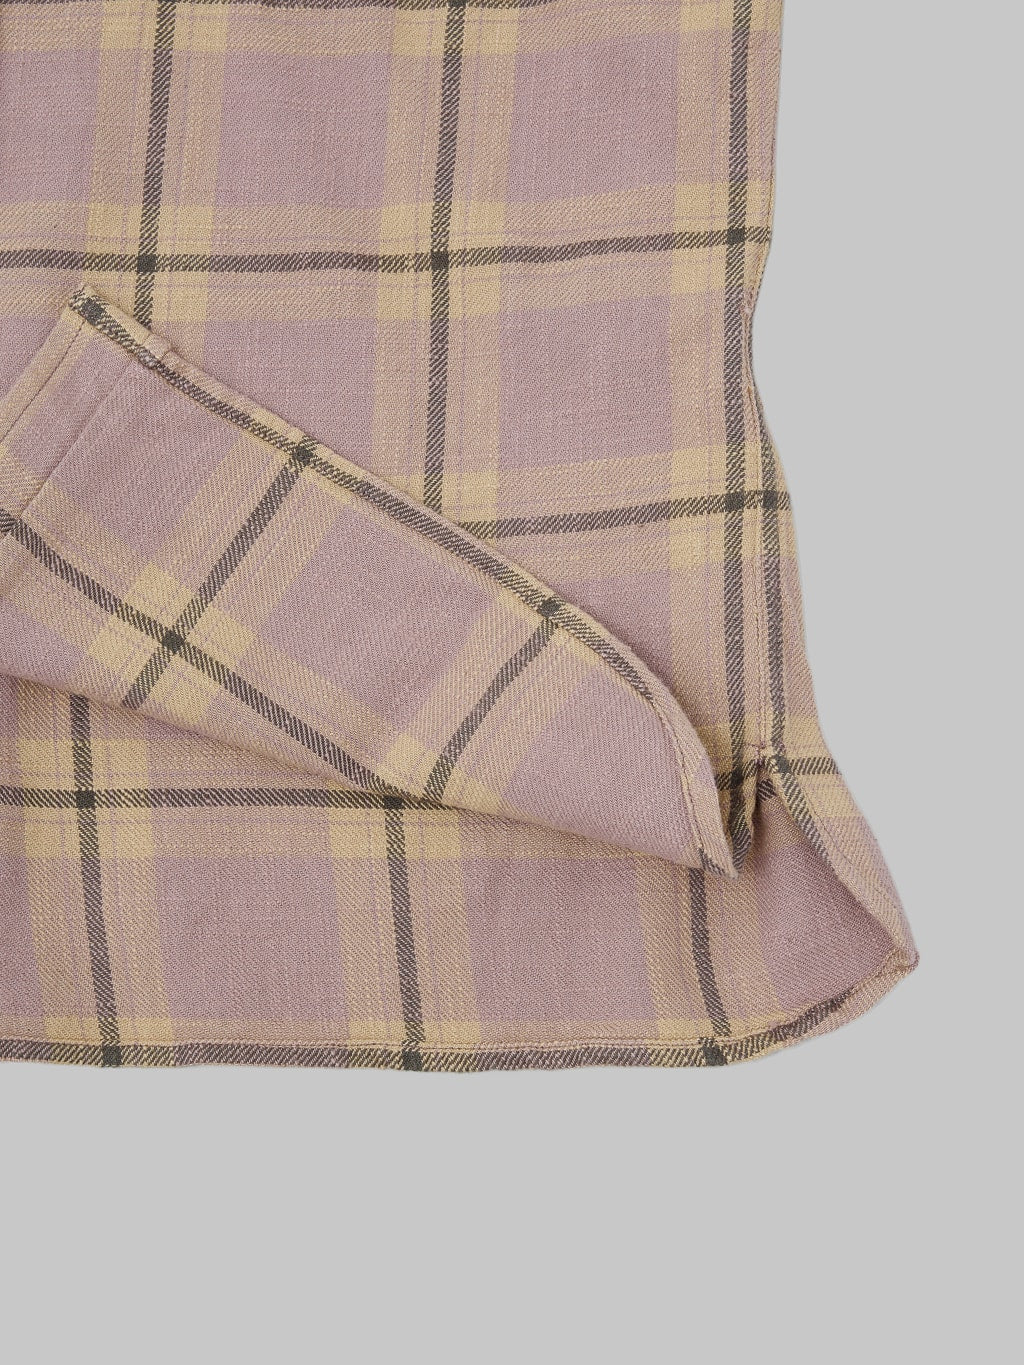 3sixteen Crosscut Flannel Mauve Slub Check shirt interior fabric